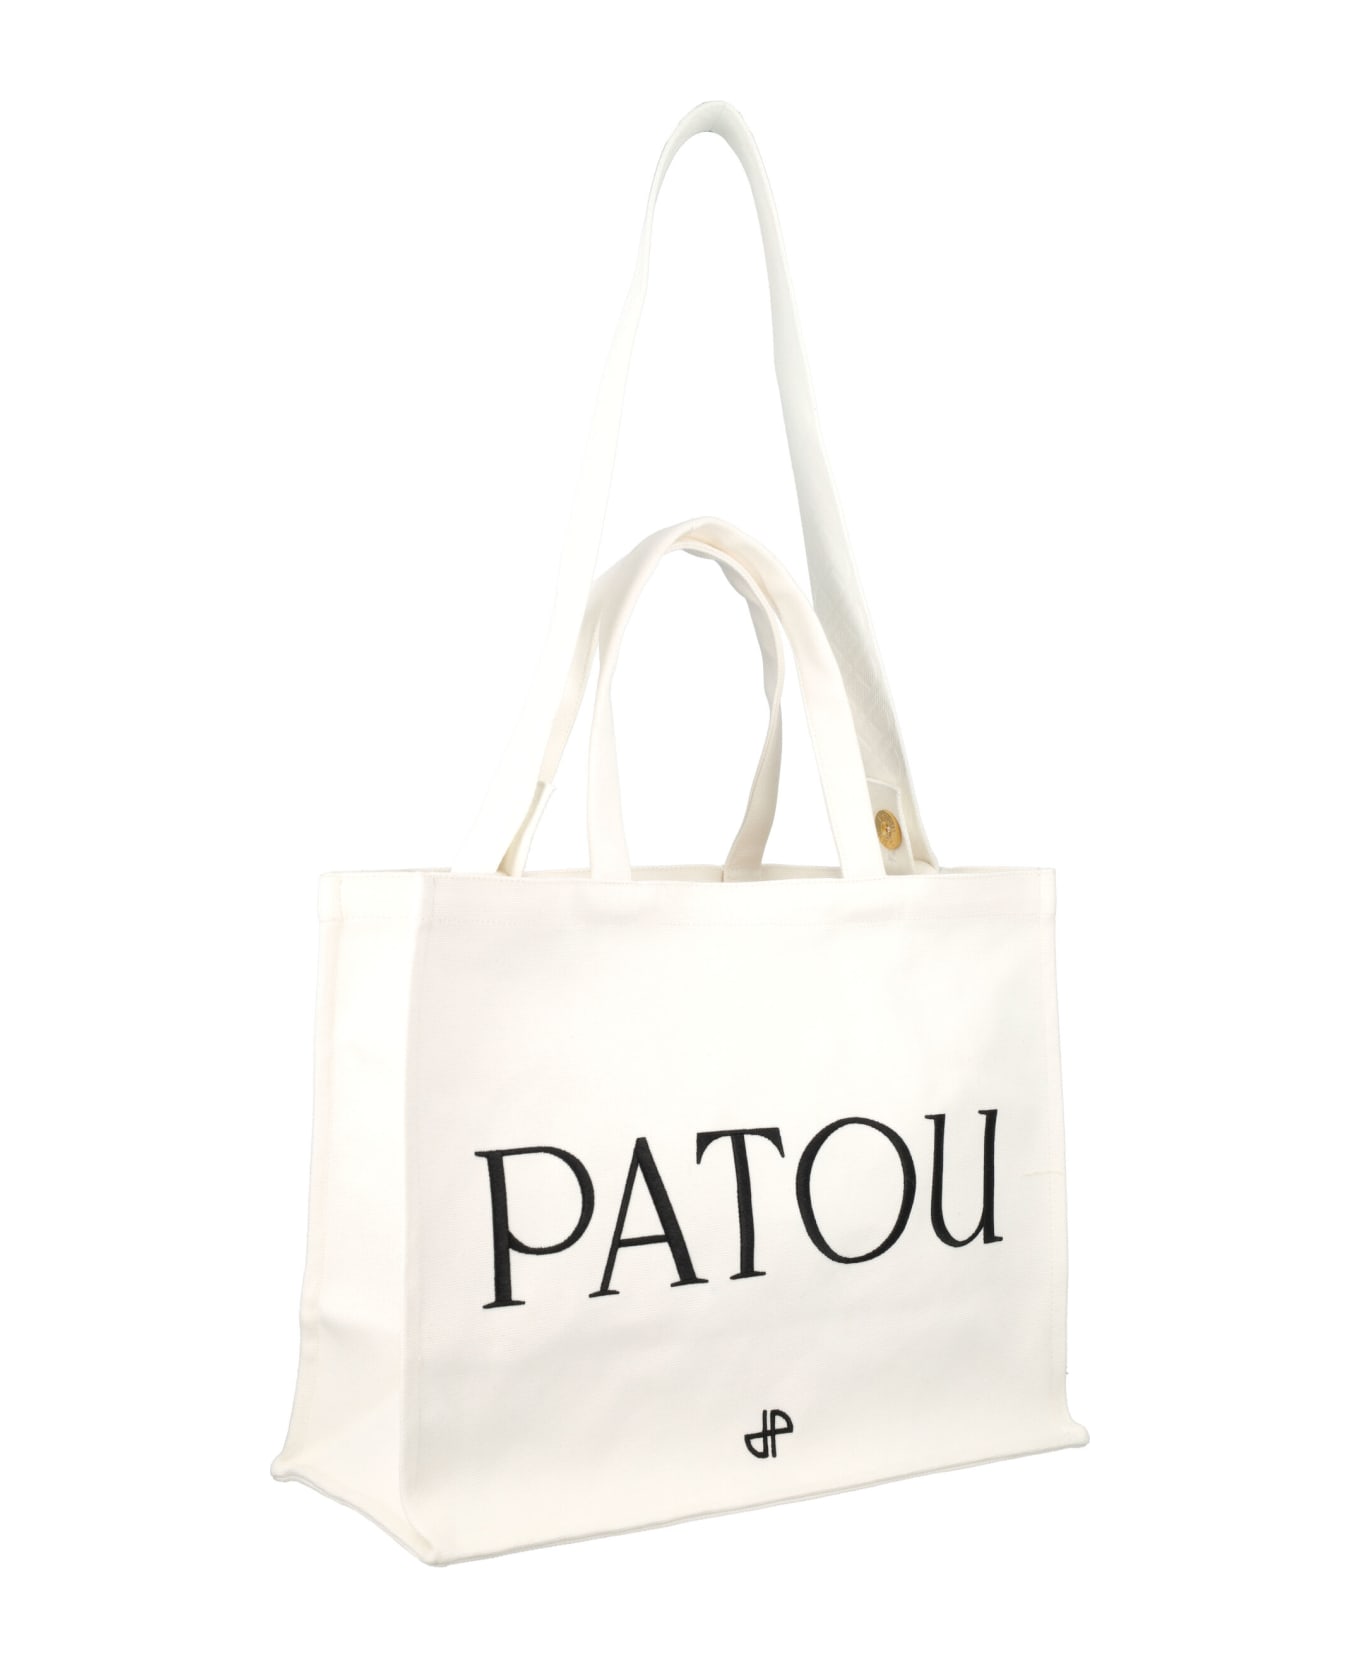 Patou Logo Tote - WHITE